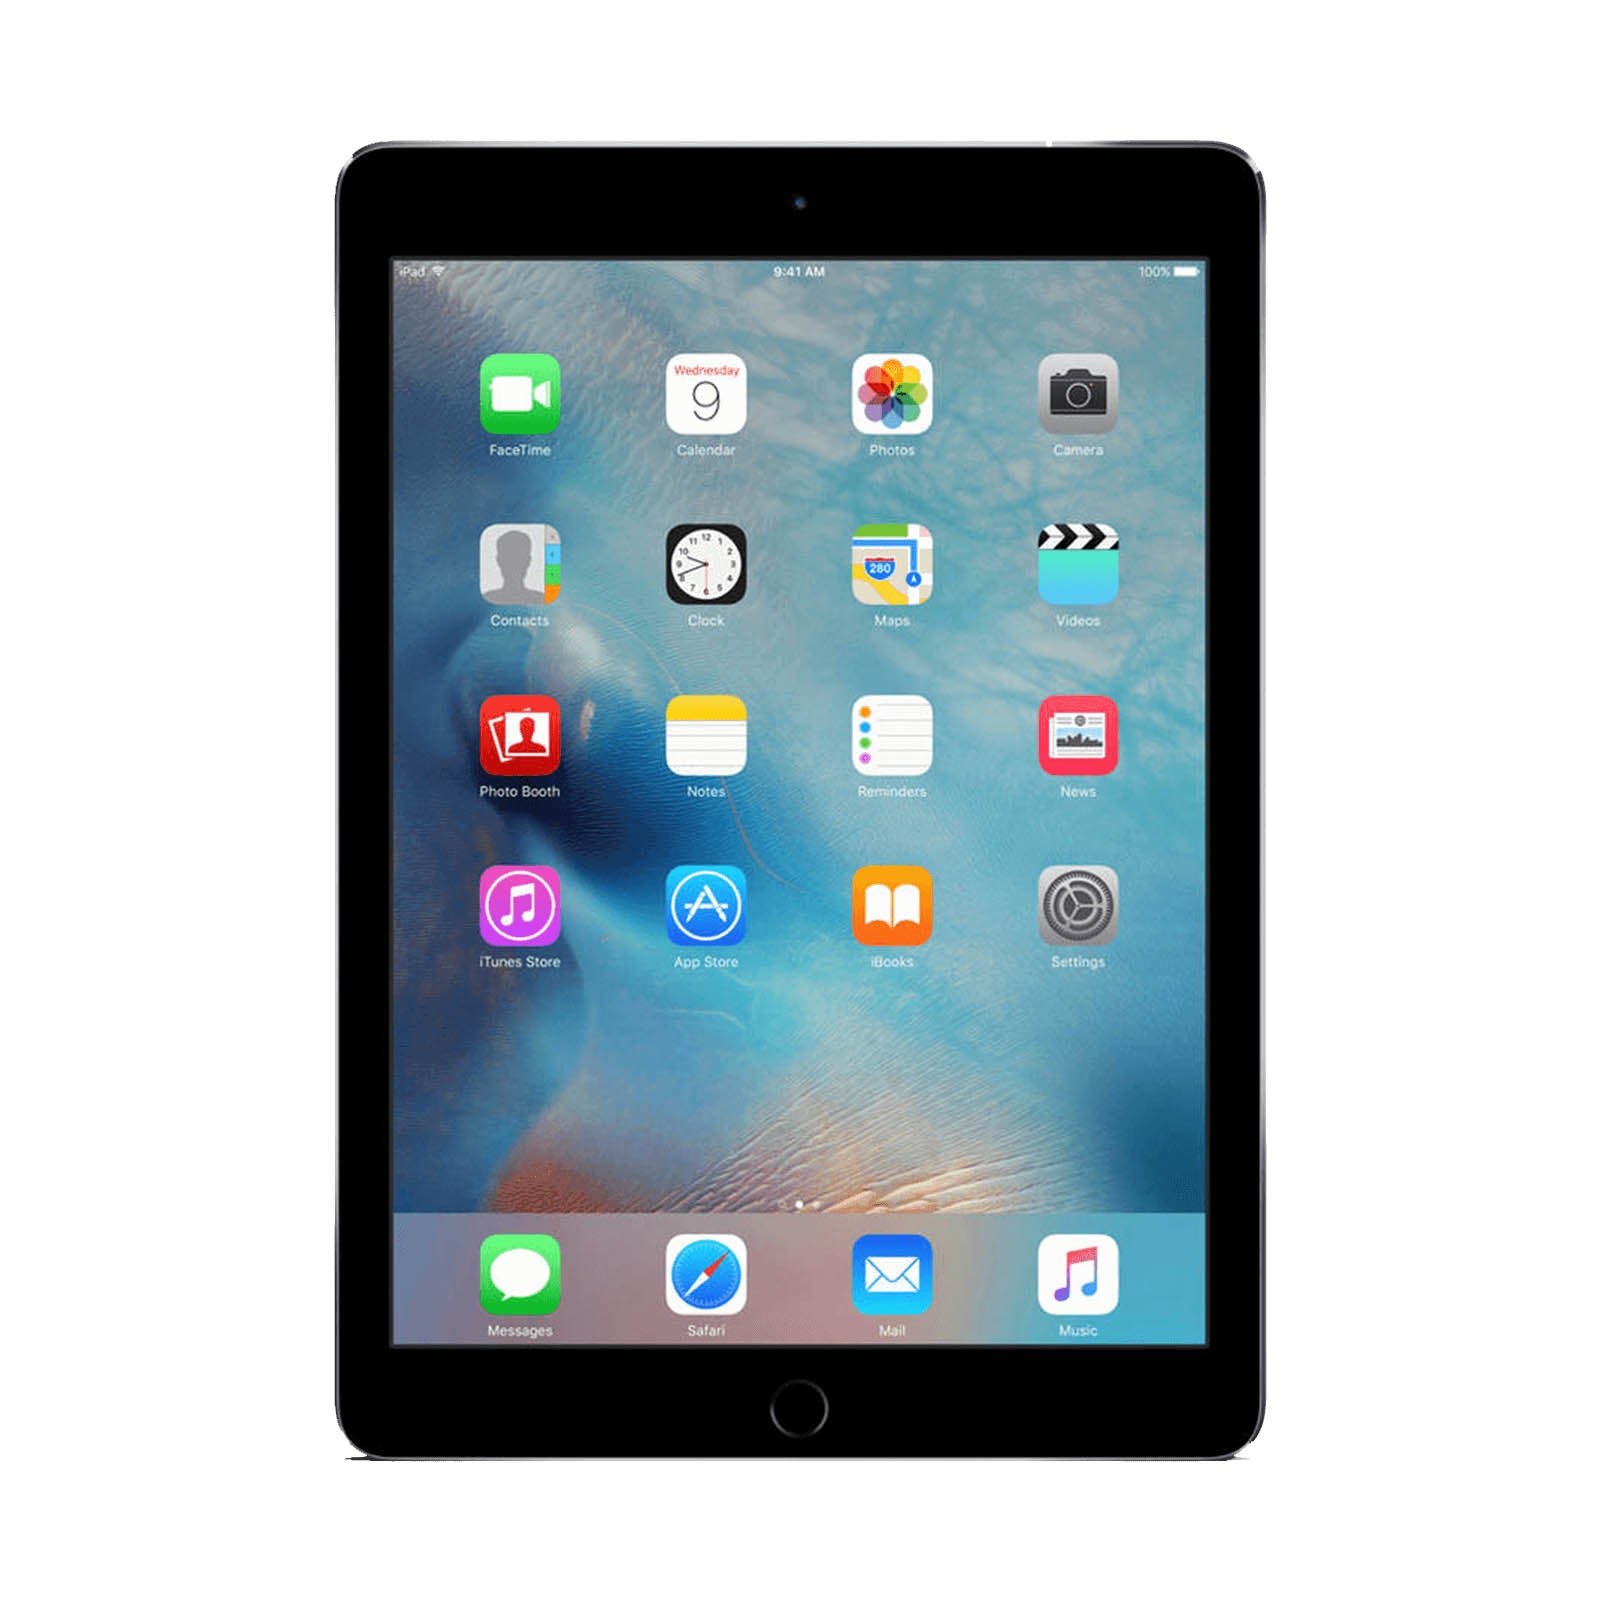 Apple iPad Pro 9.7" 128GB Space Grey Very Good - Unlocked